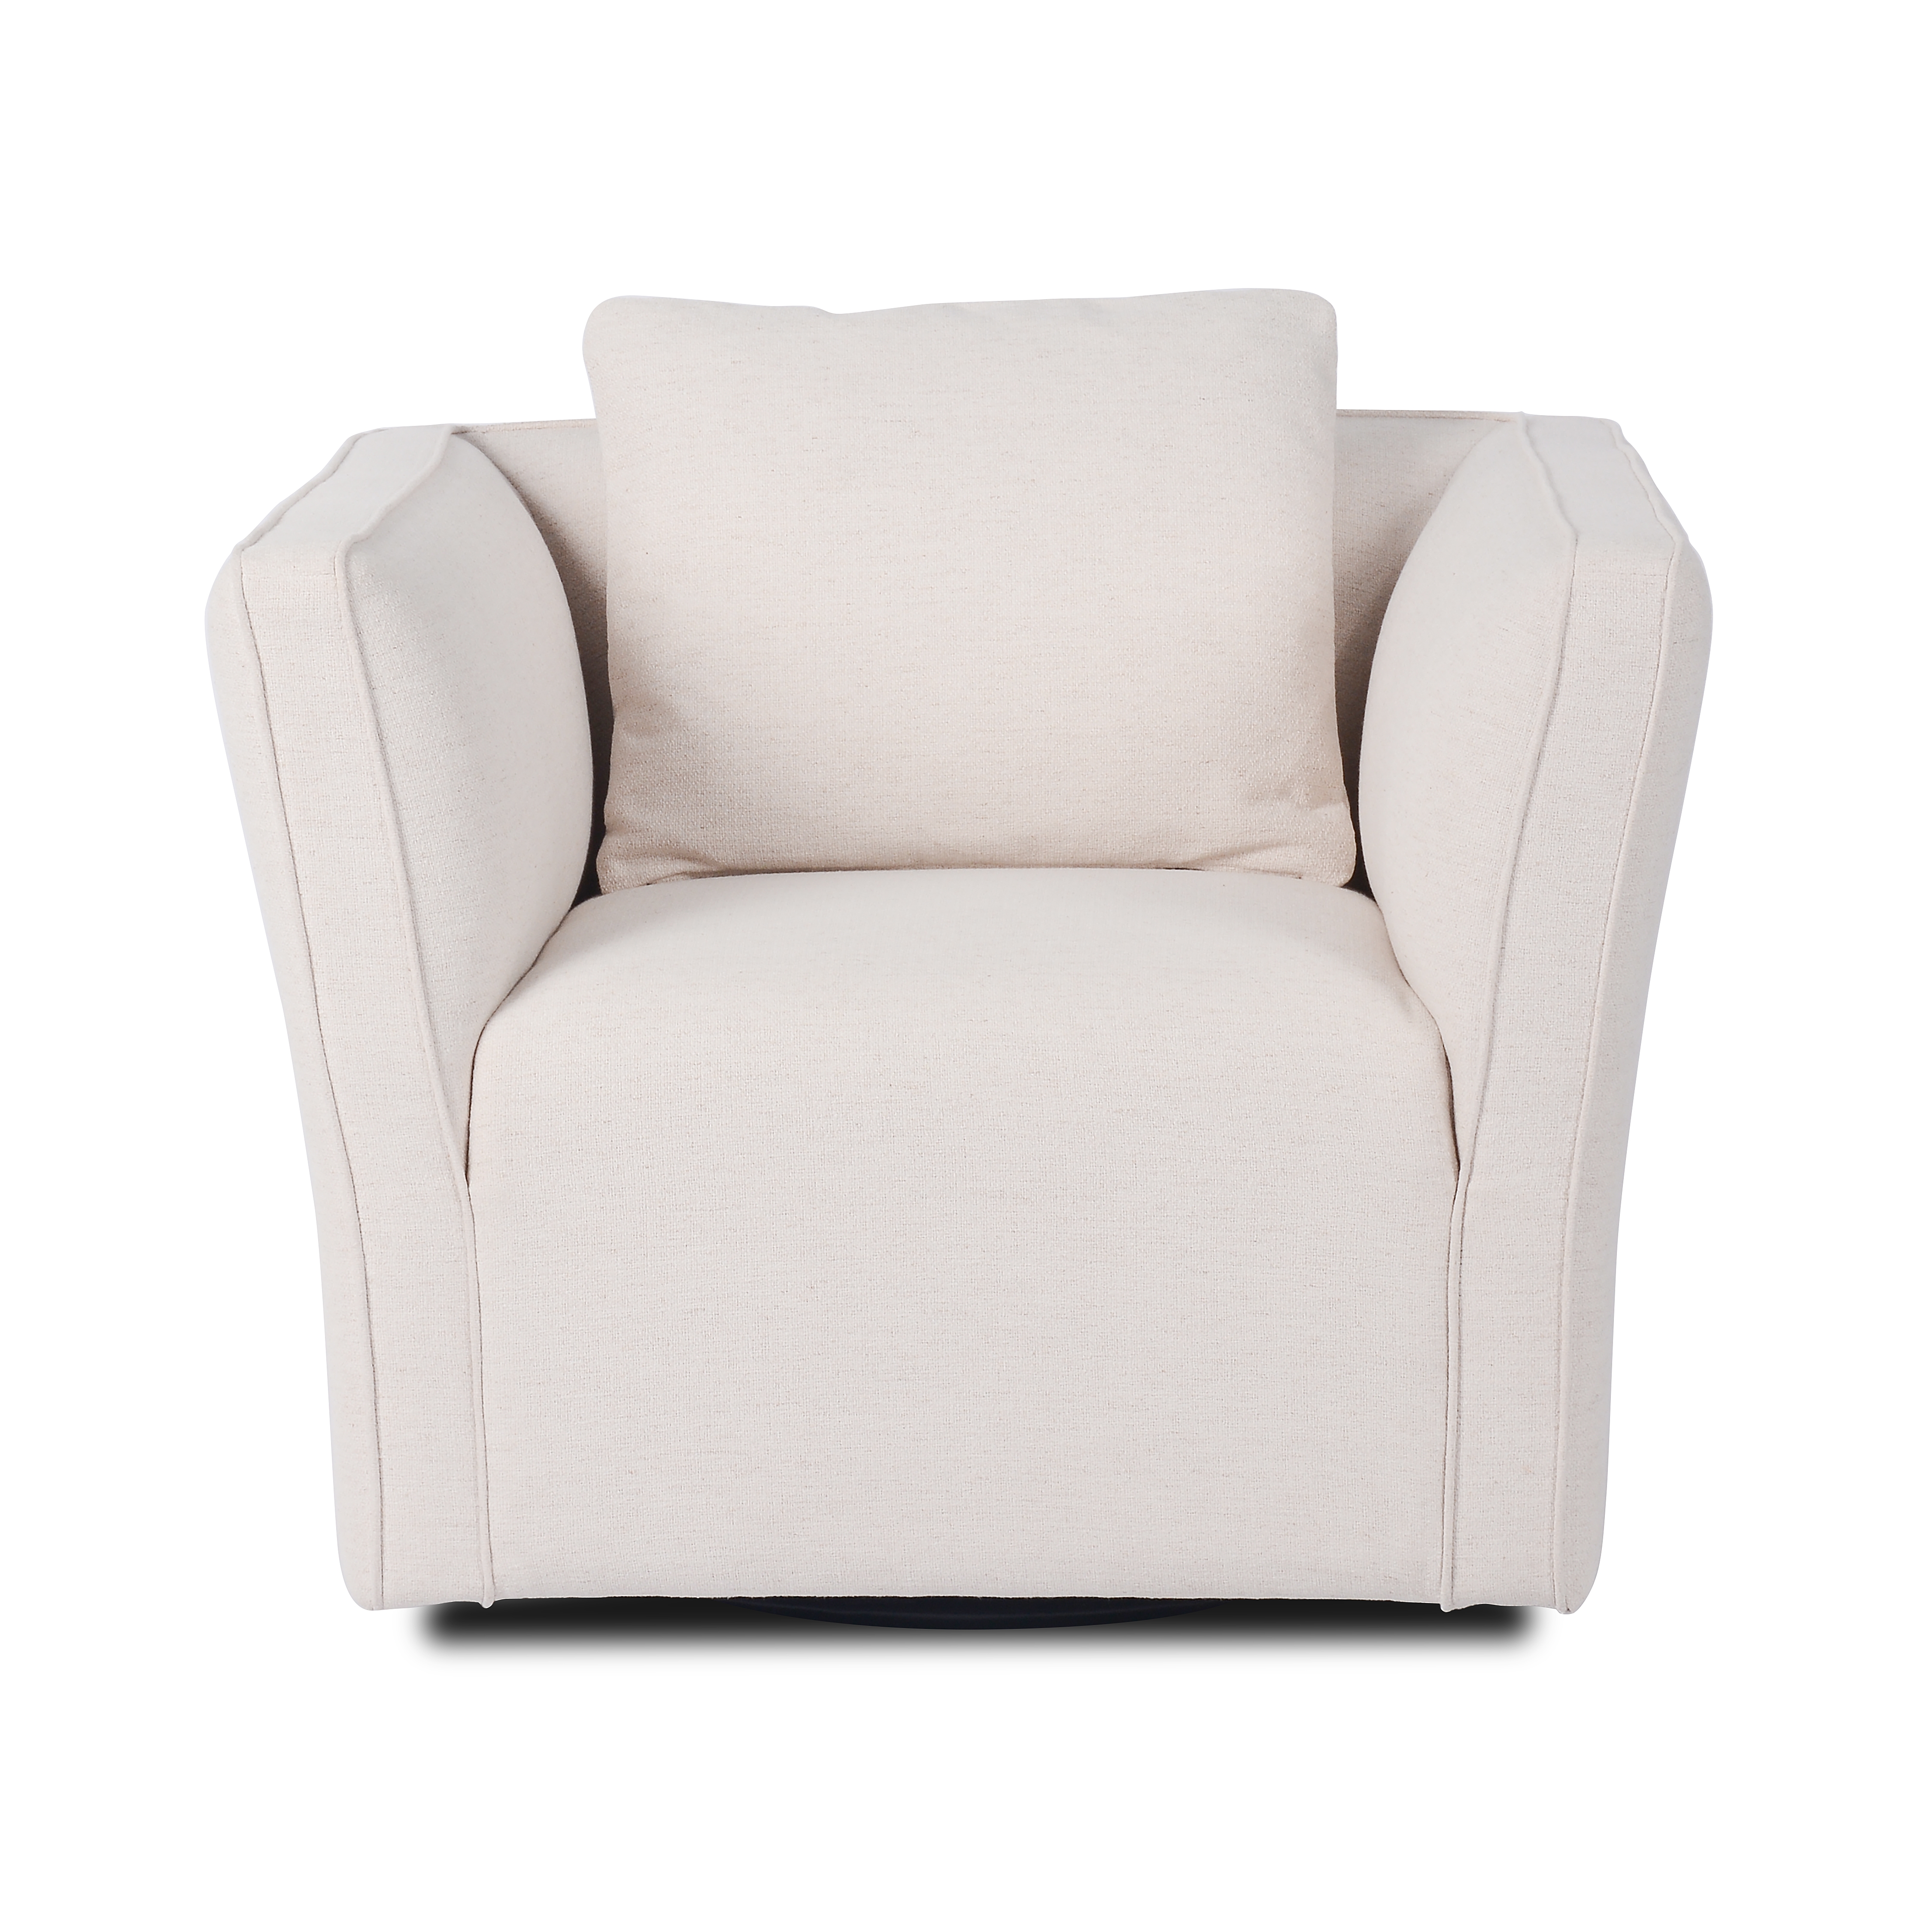 Cantrell Swivel Chair-Badon Flax - Image 3